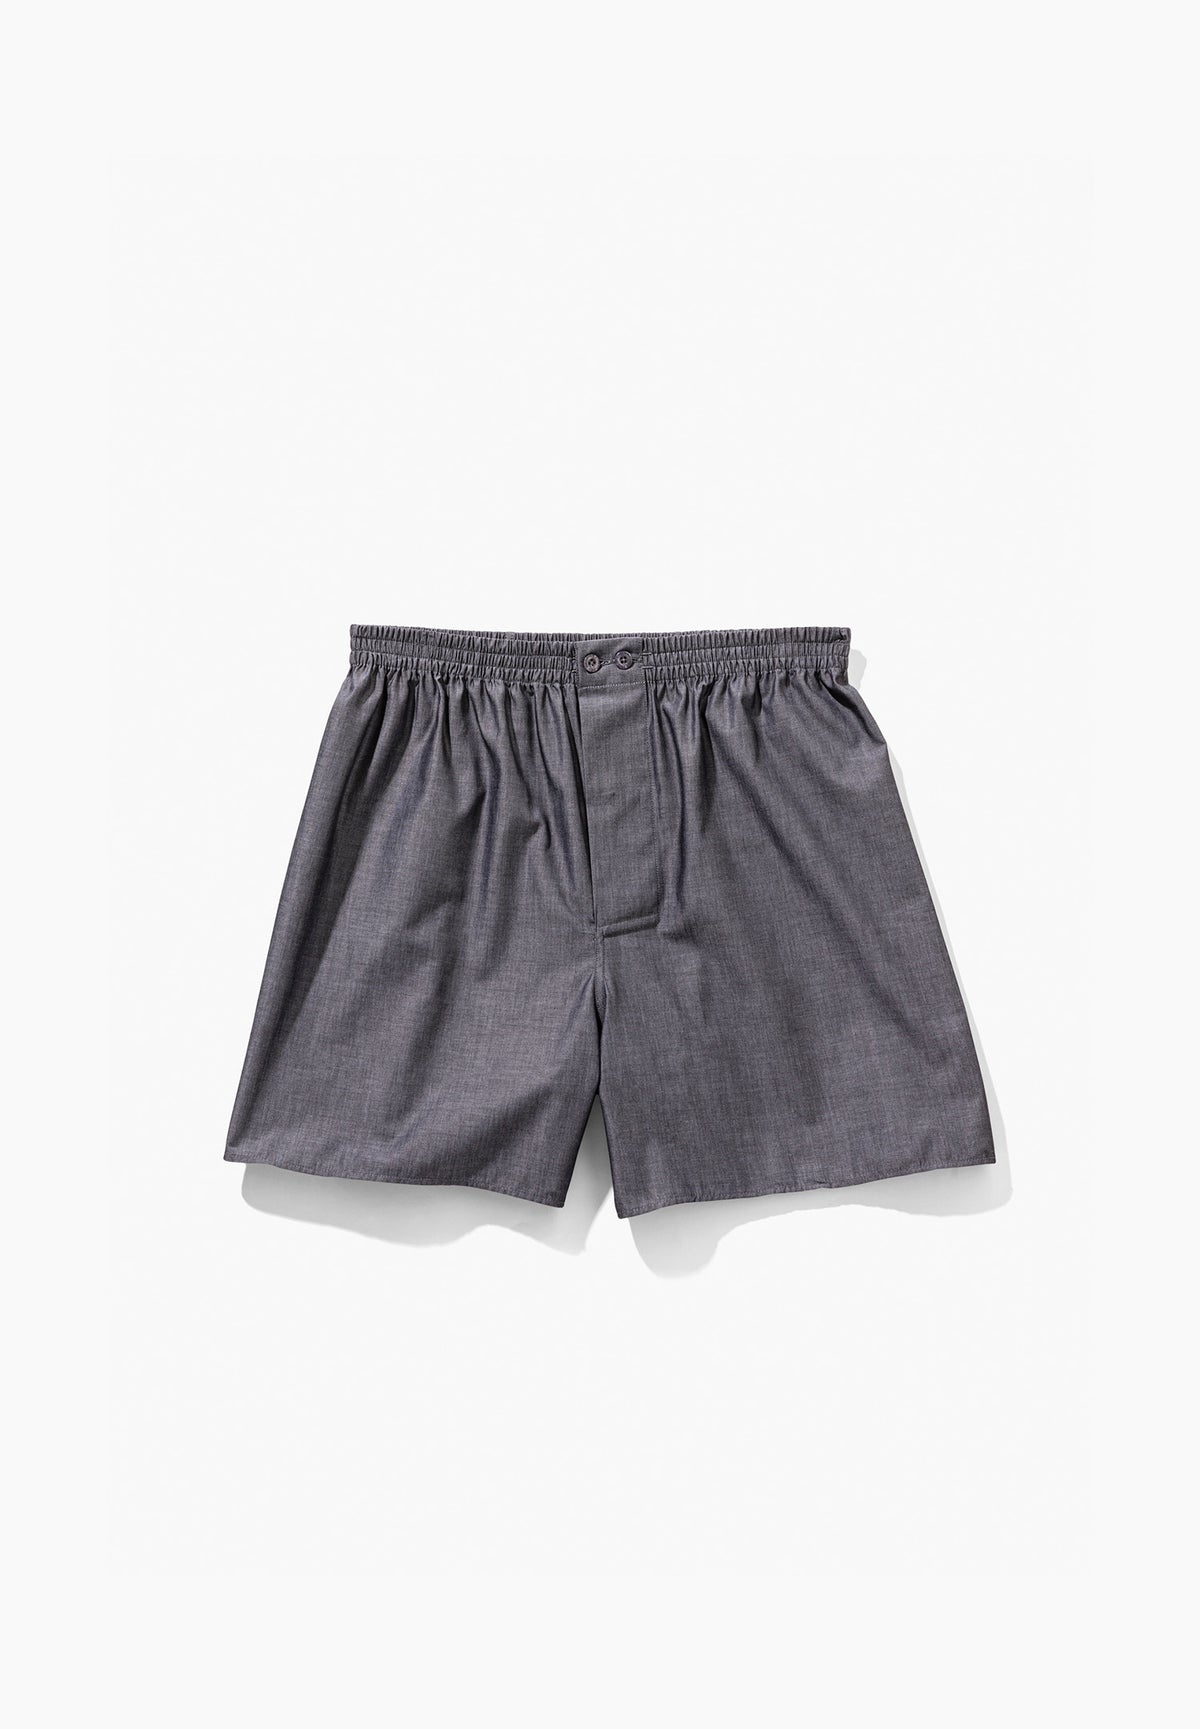 Fil à Fil Cotton | Boxer Shorts - dark grey mélange